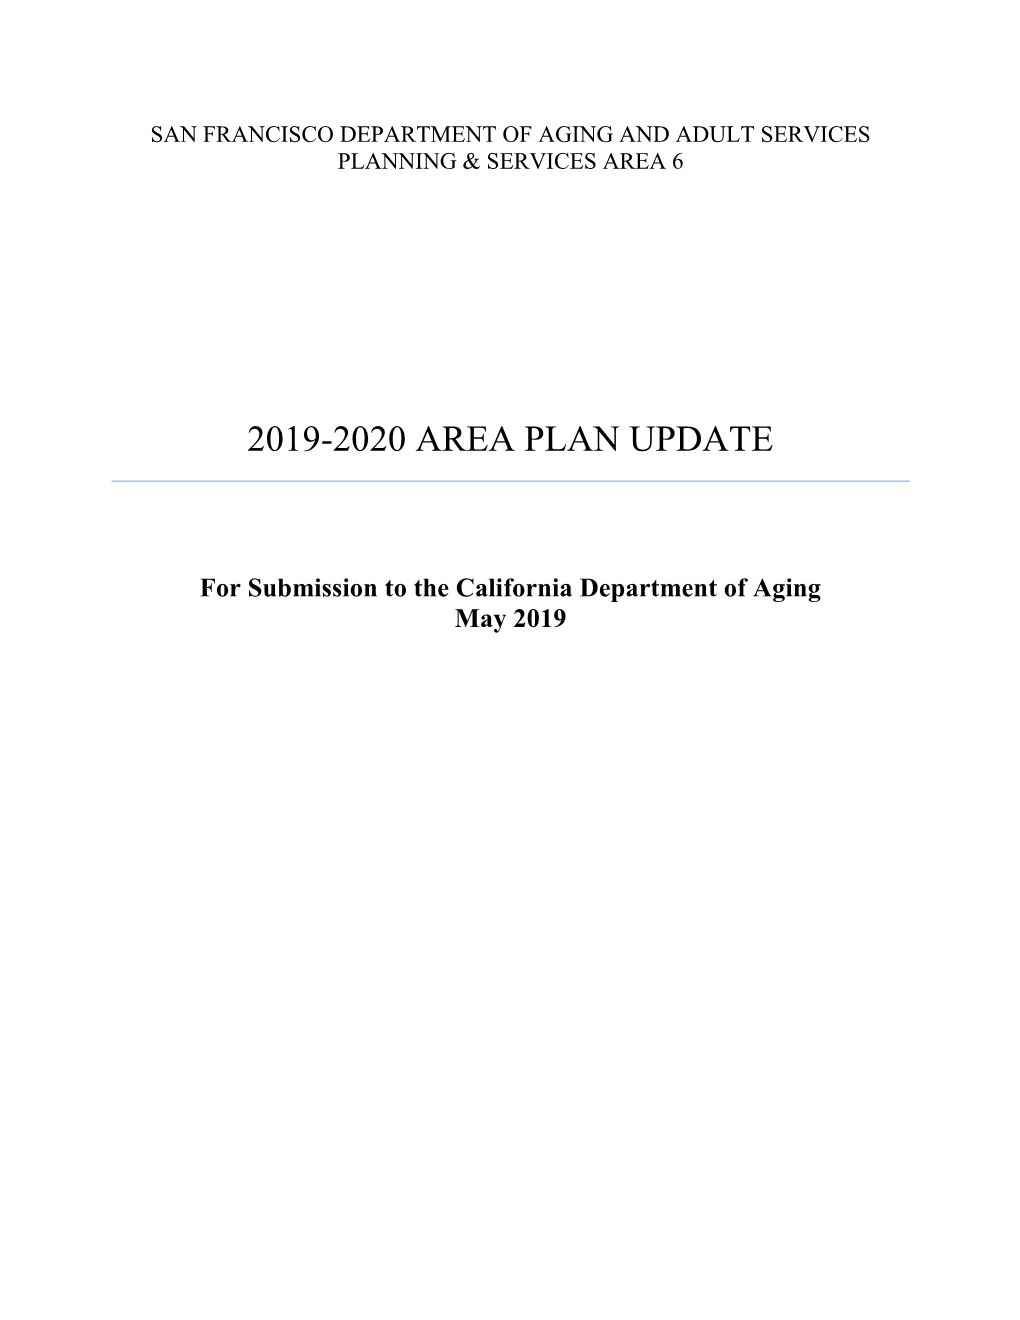 2019-2020 Area Plan Update